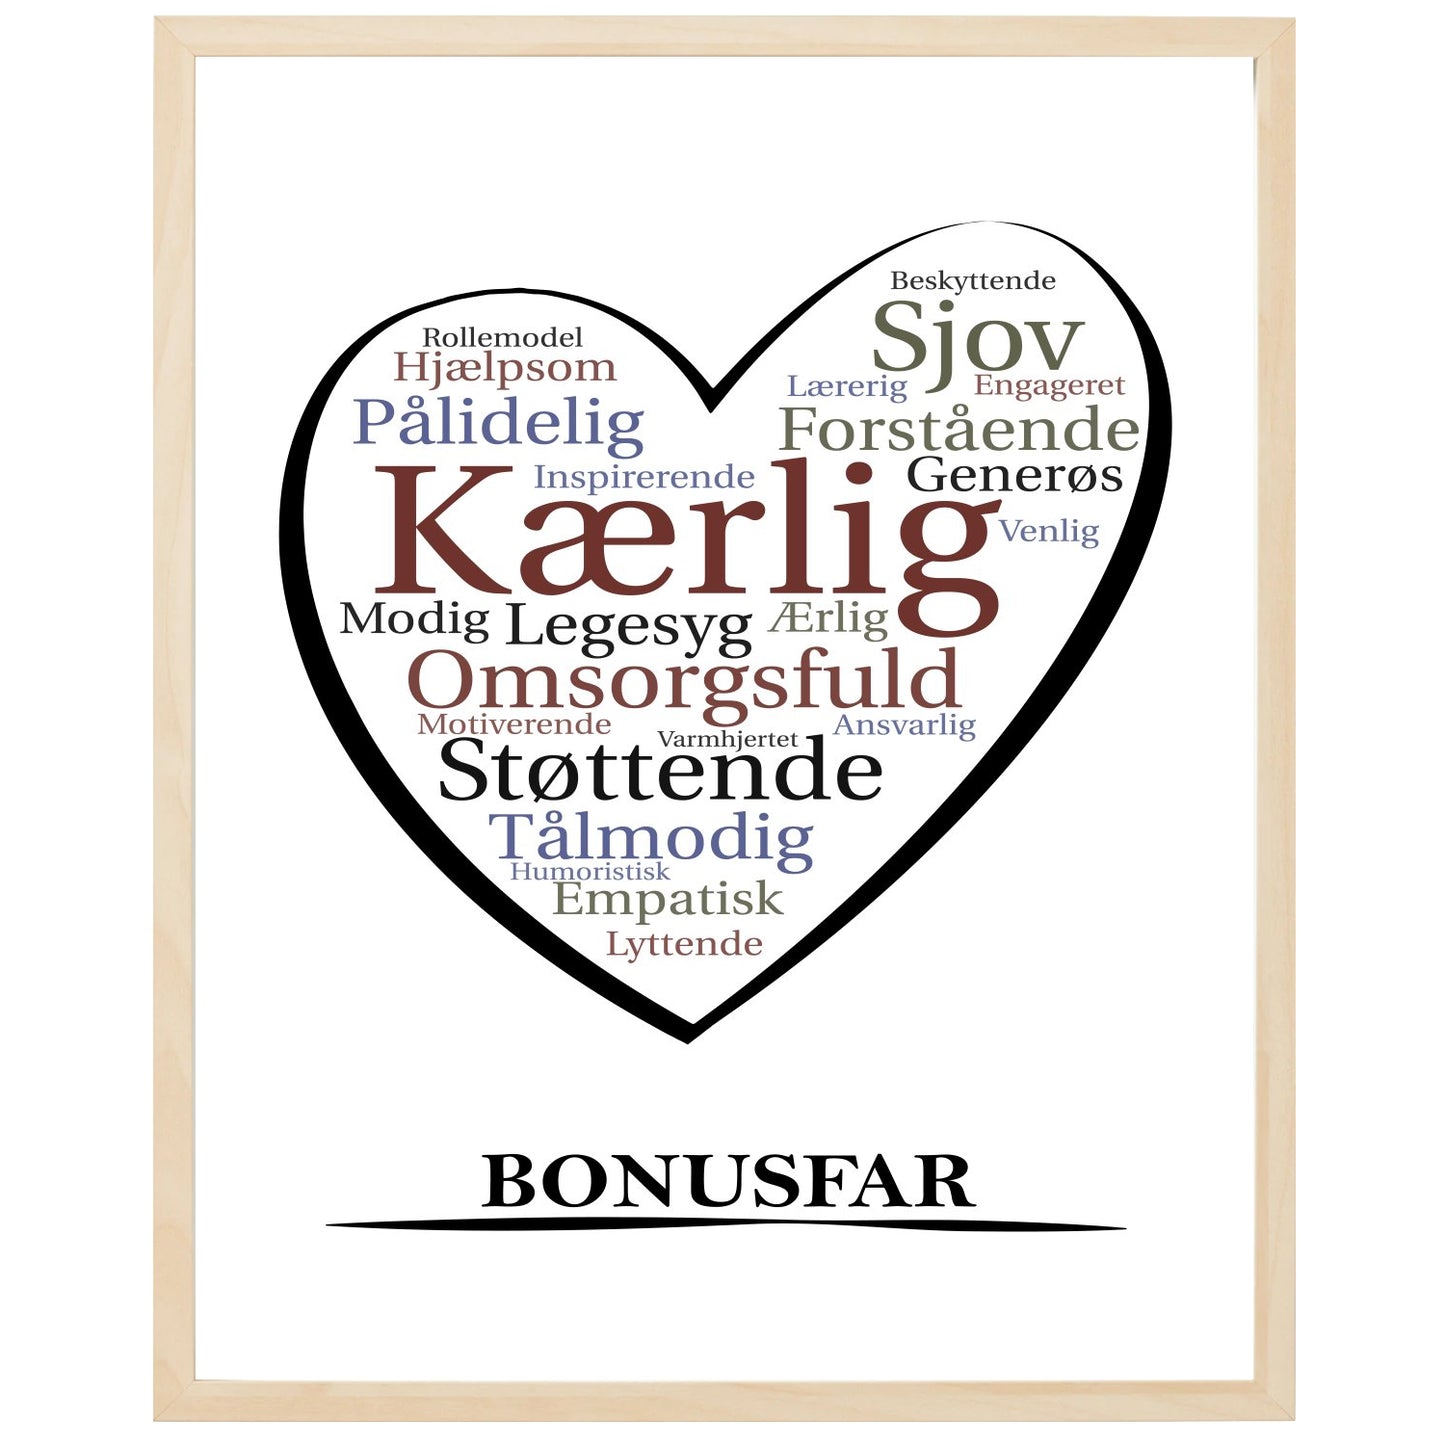 En plakat med overskriften Bonusfar, et hjerte og indeni hjertet mange positive ord som beskriver en Bonusfar